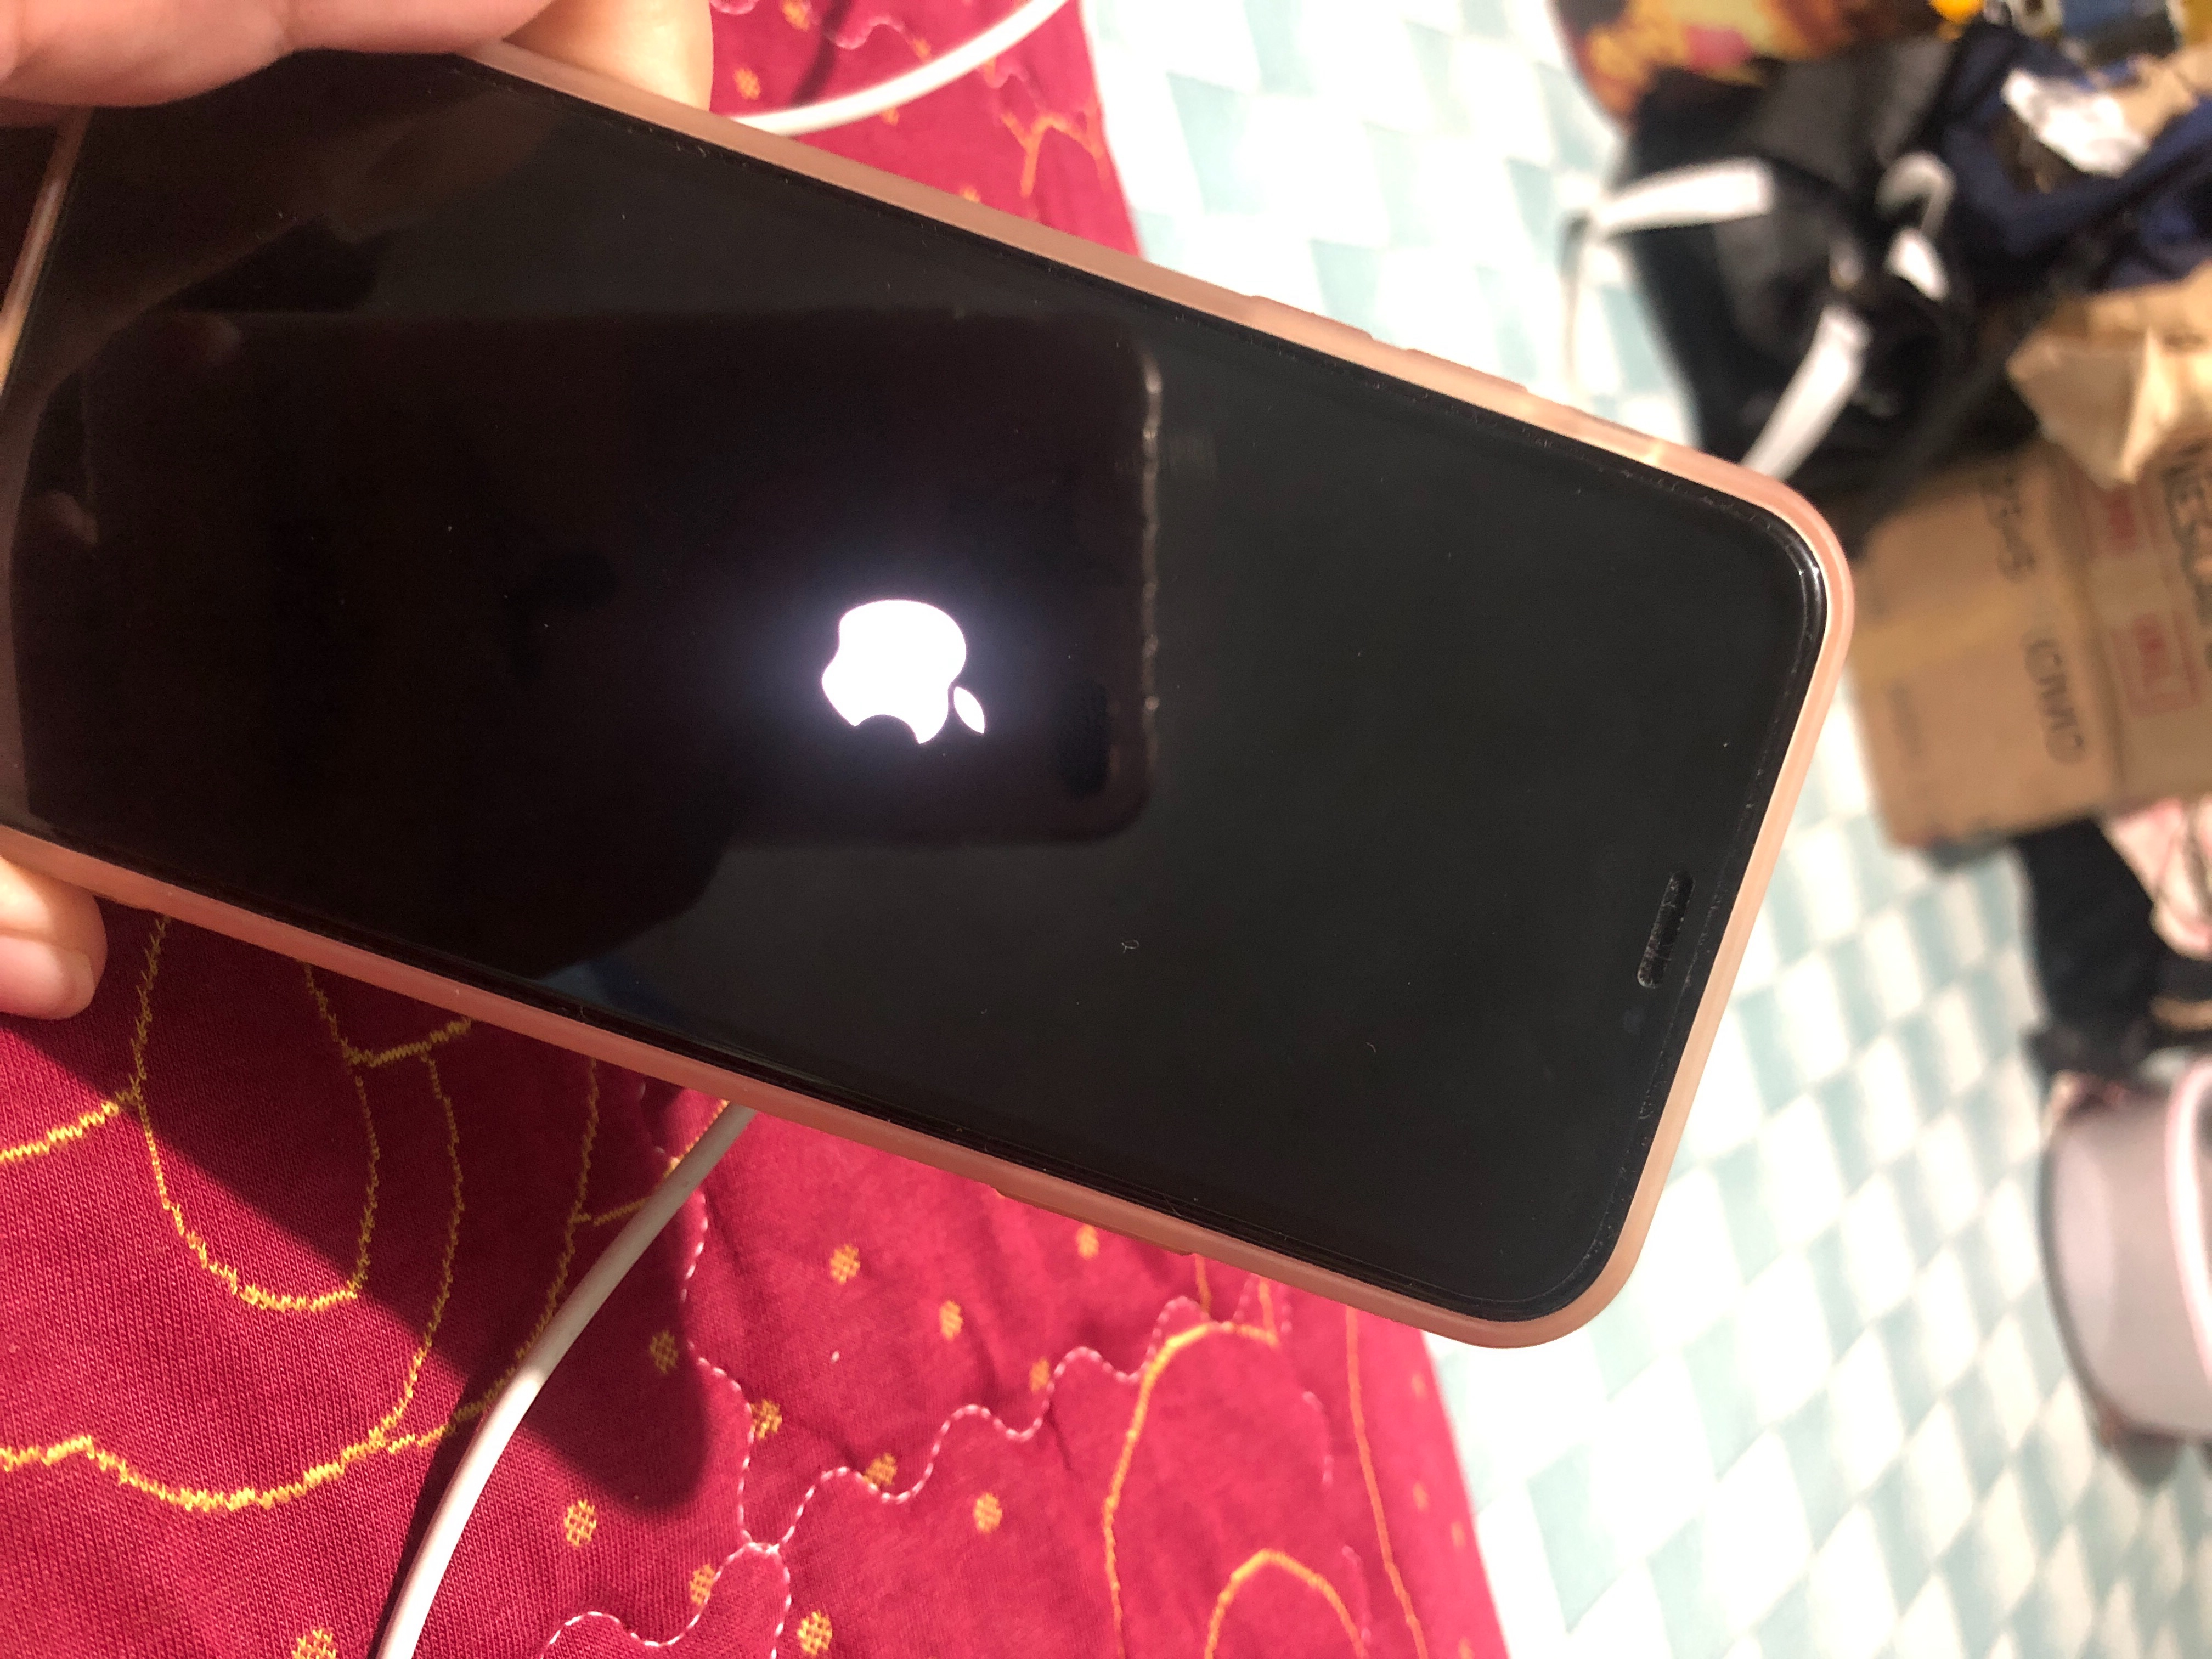 phone stuck on apple logo iphone x